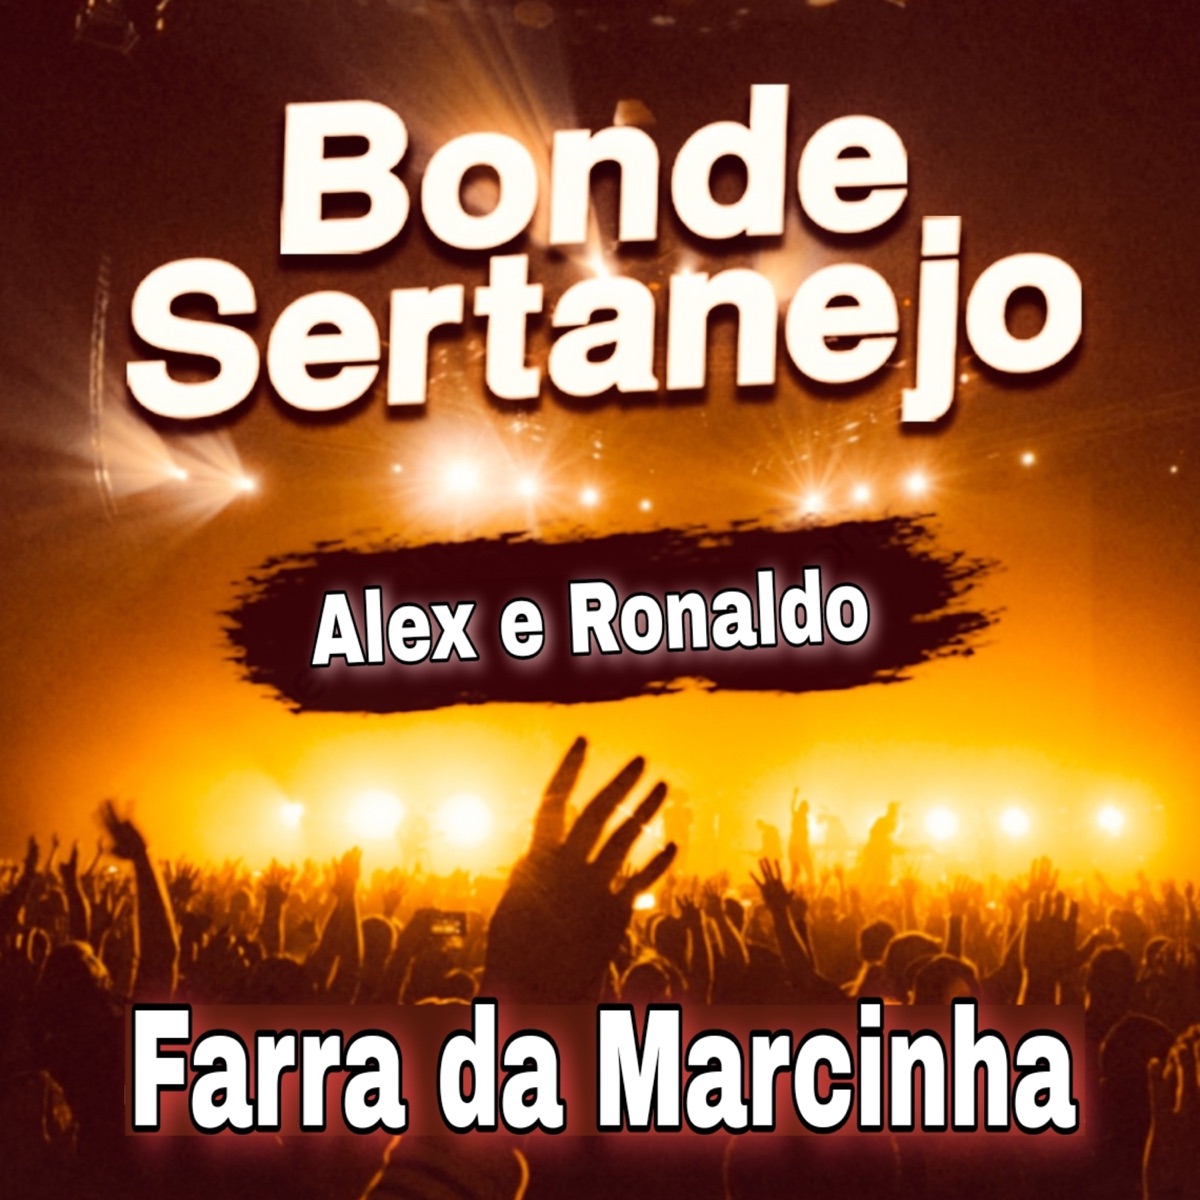 Olhar de Loba - Single - Album by Alex e Ronaldo - Apple Music